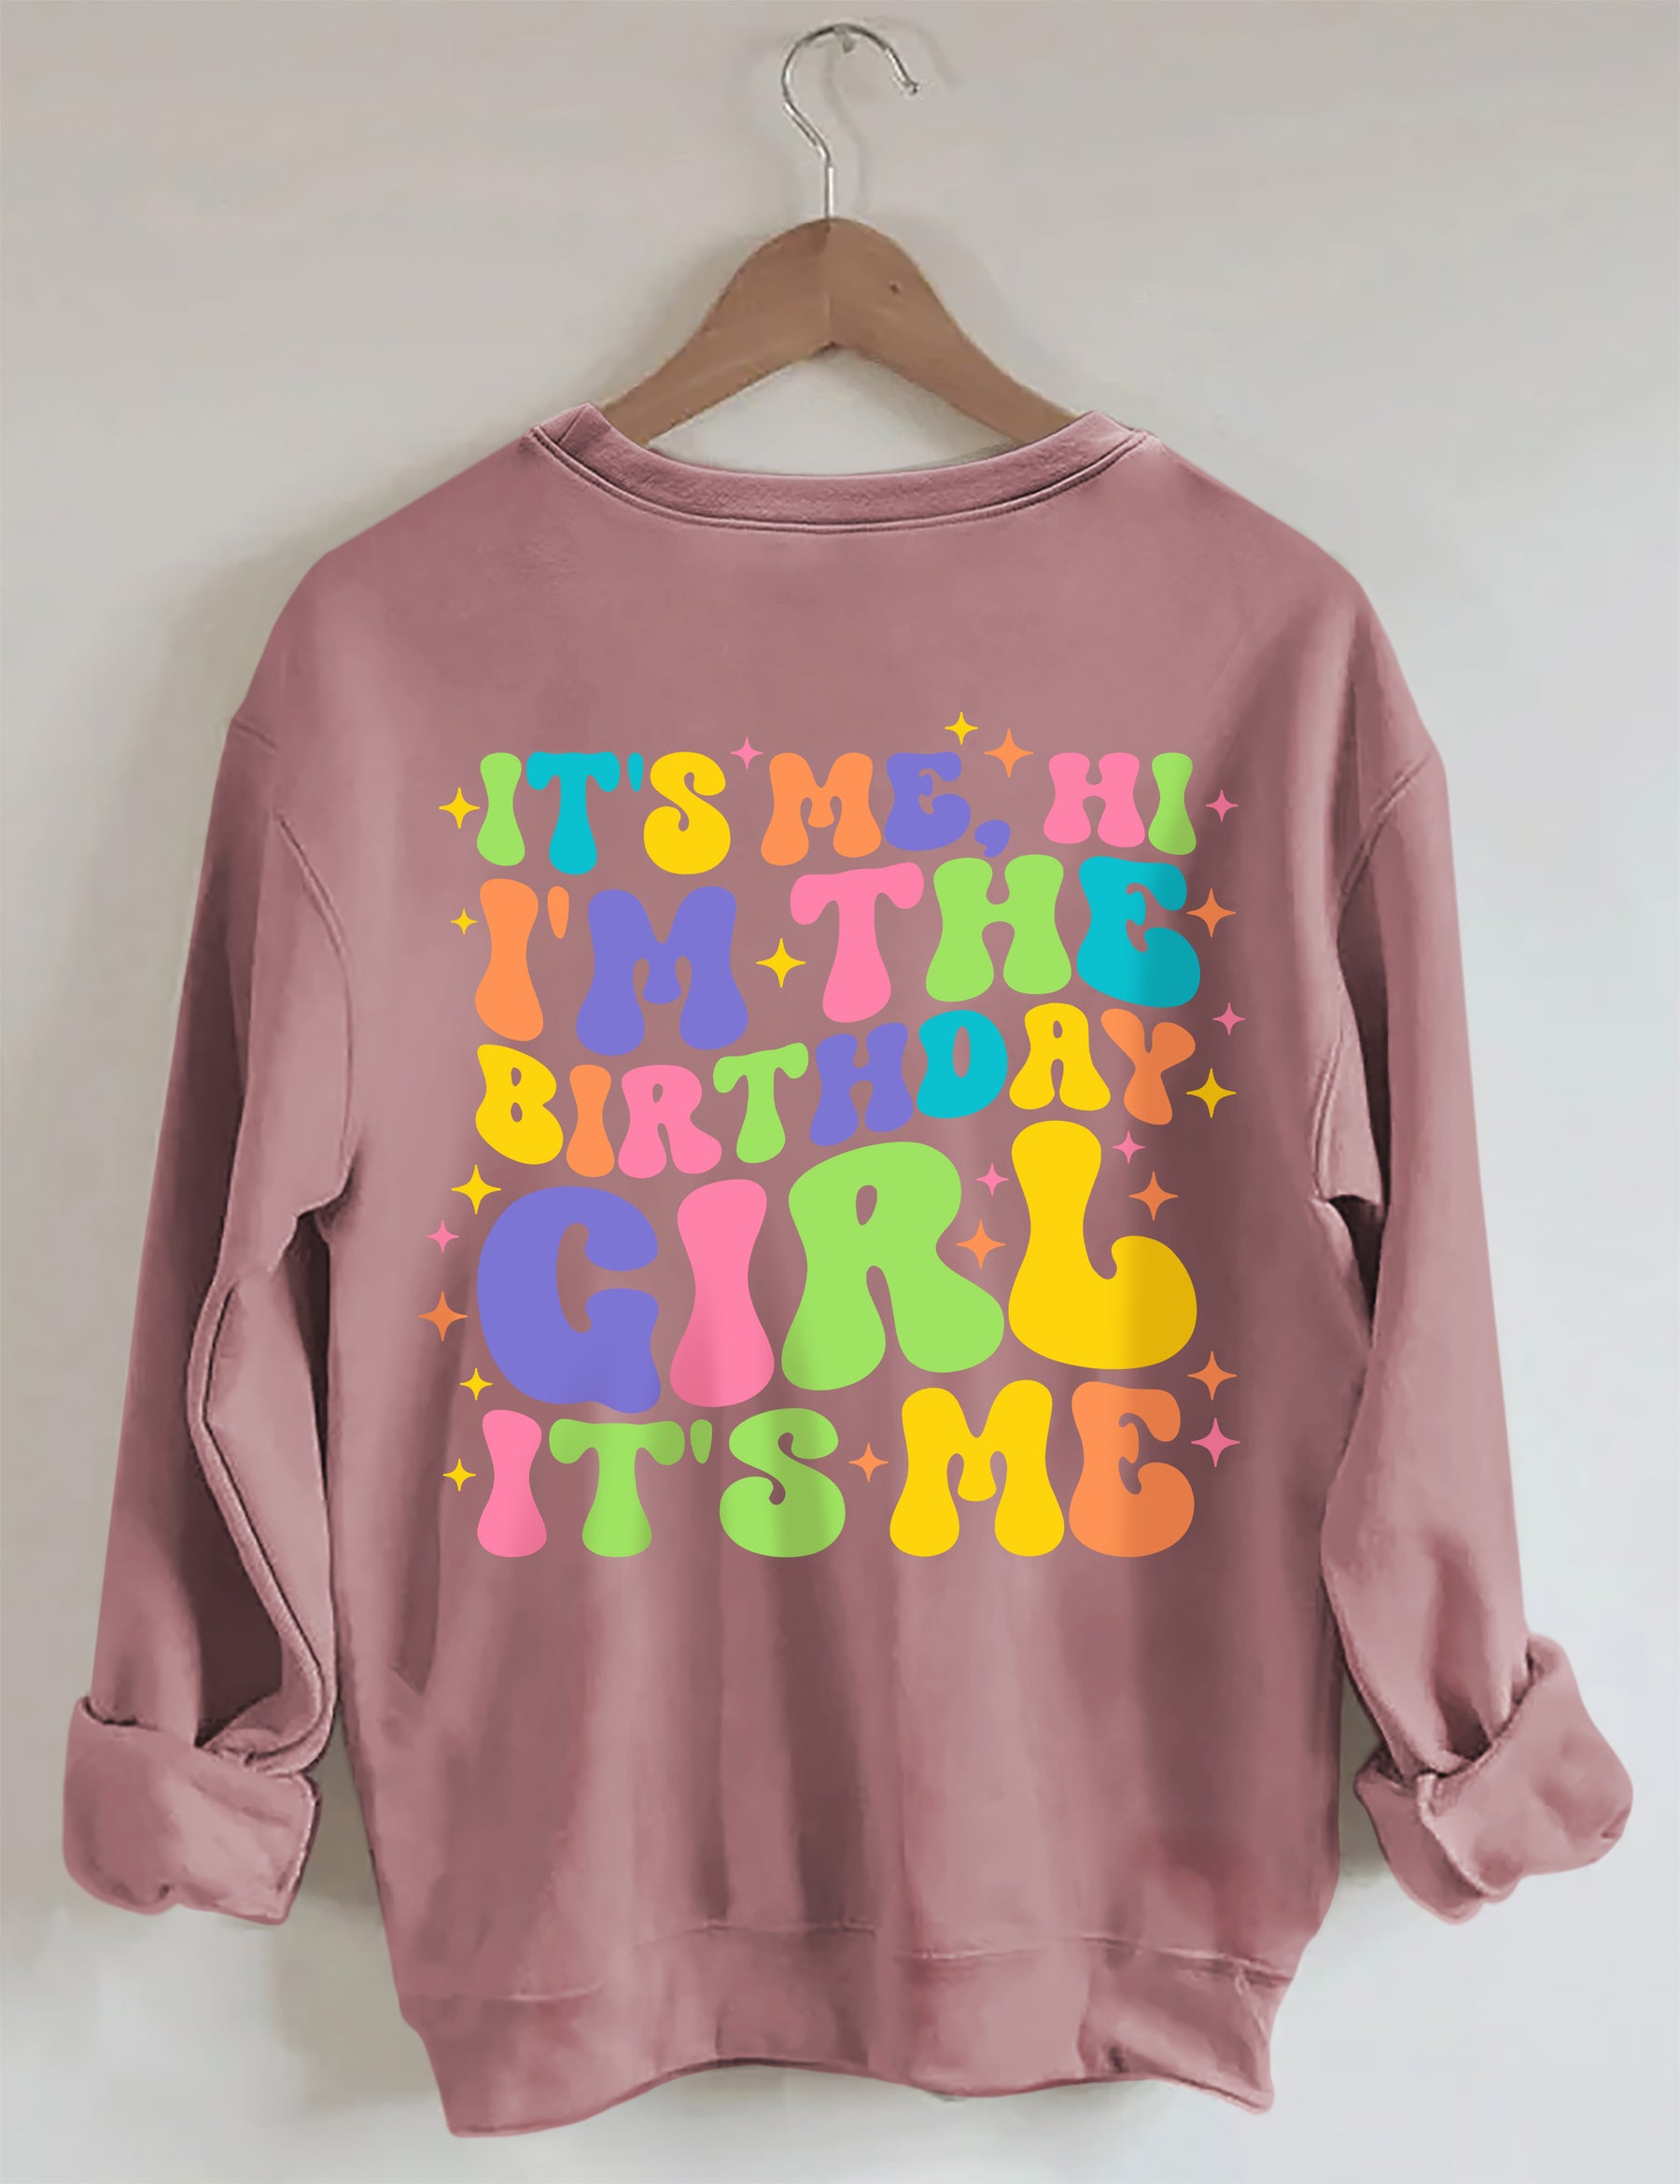 It's Me Hi I'm The Birthday Girl It's Me Sweatshirt